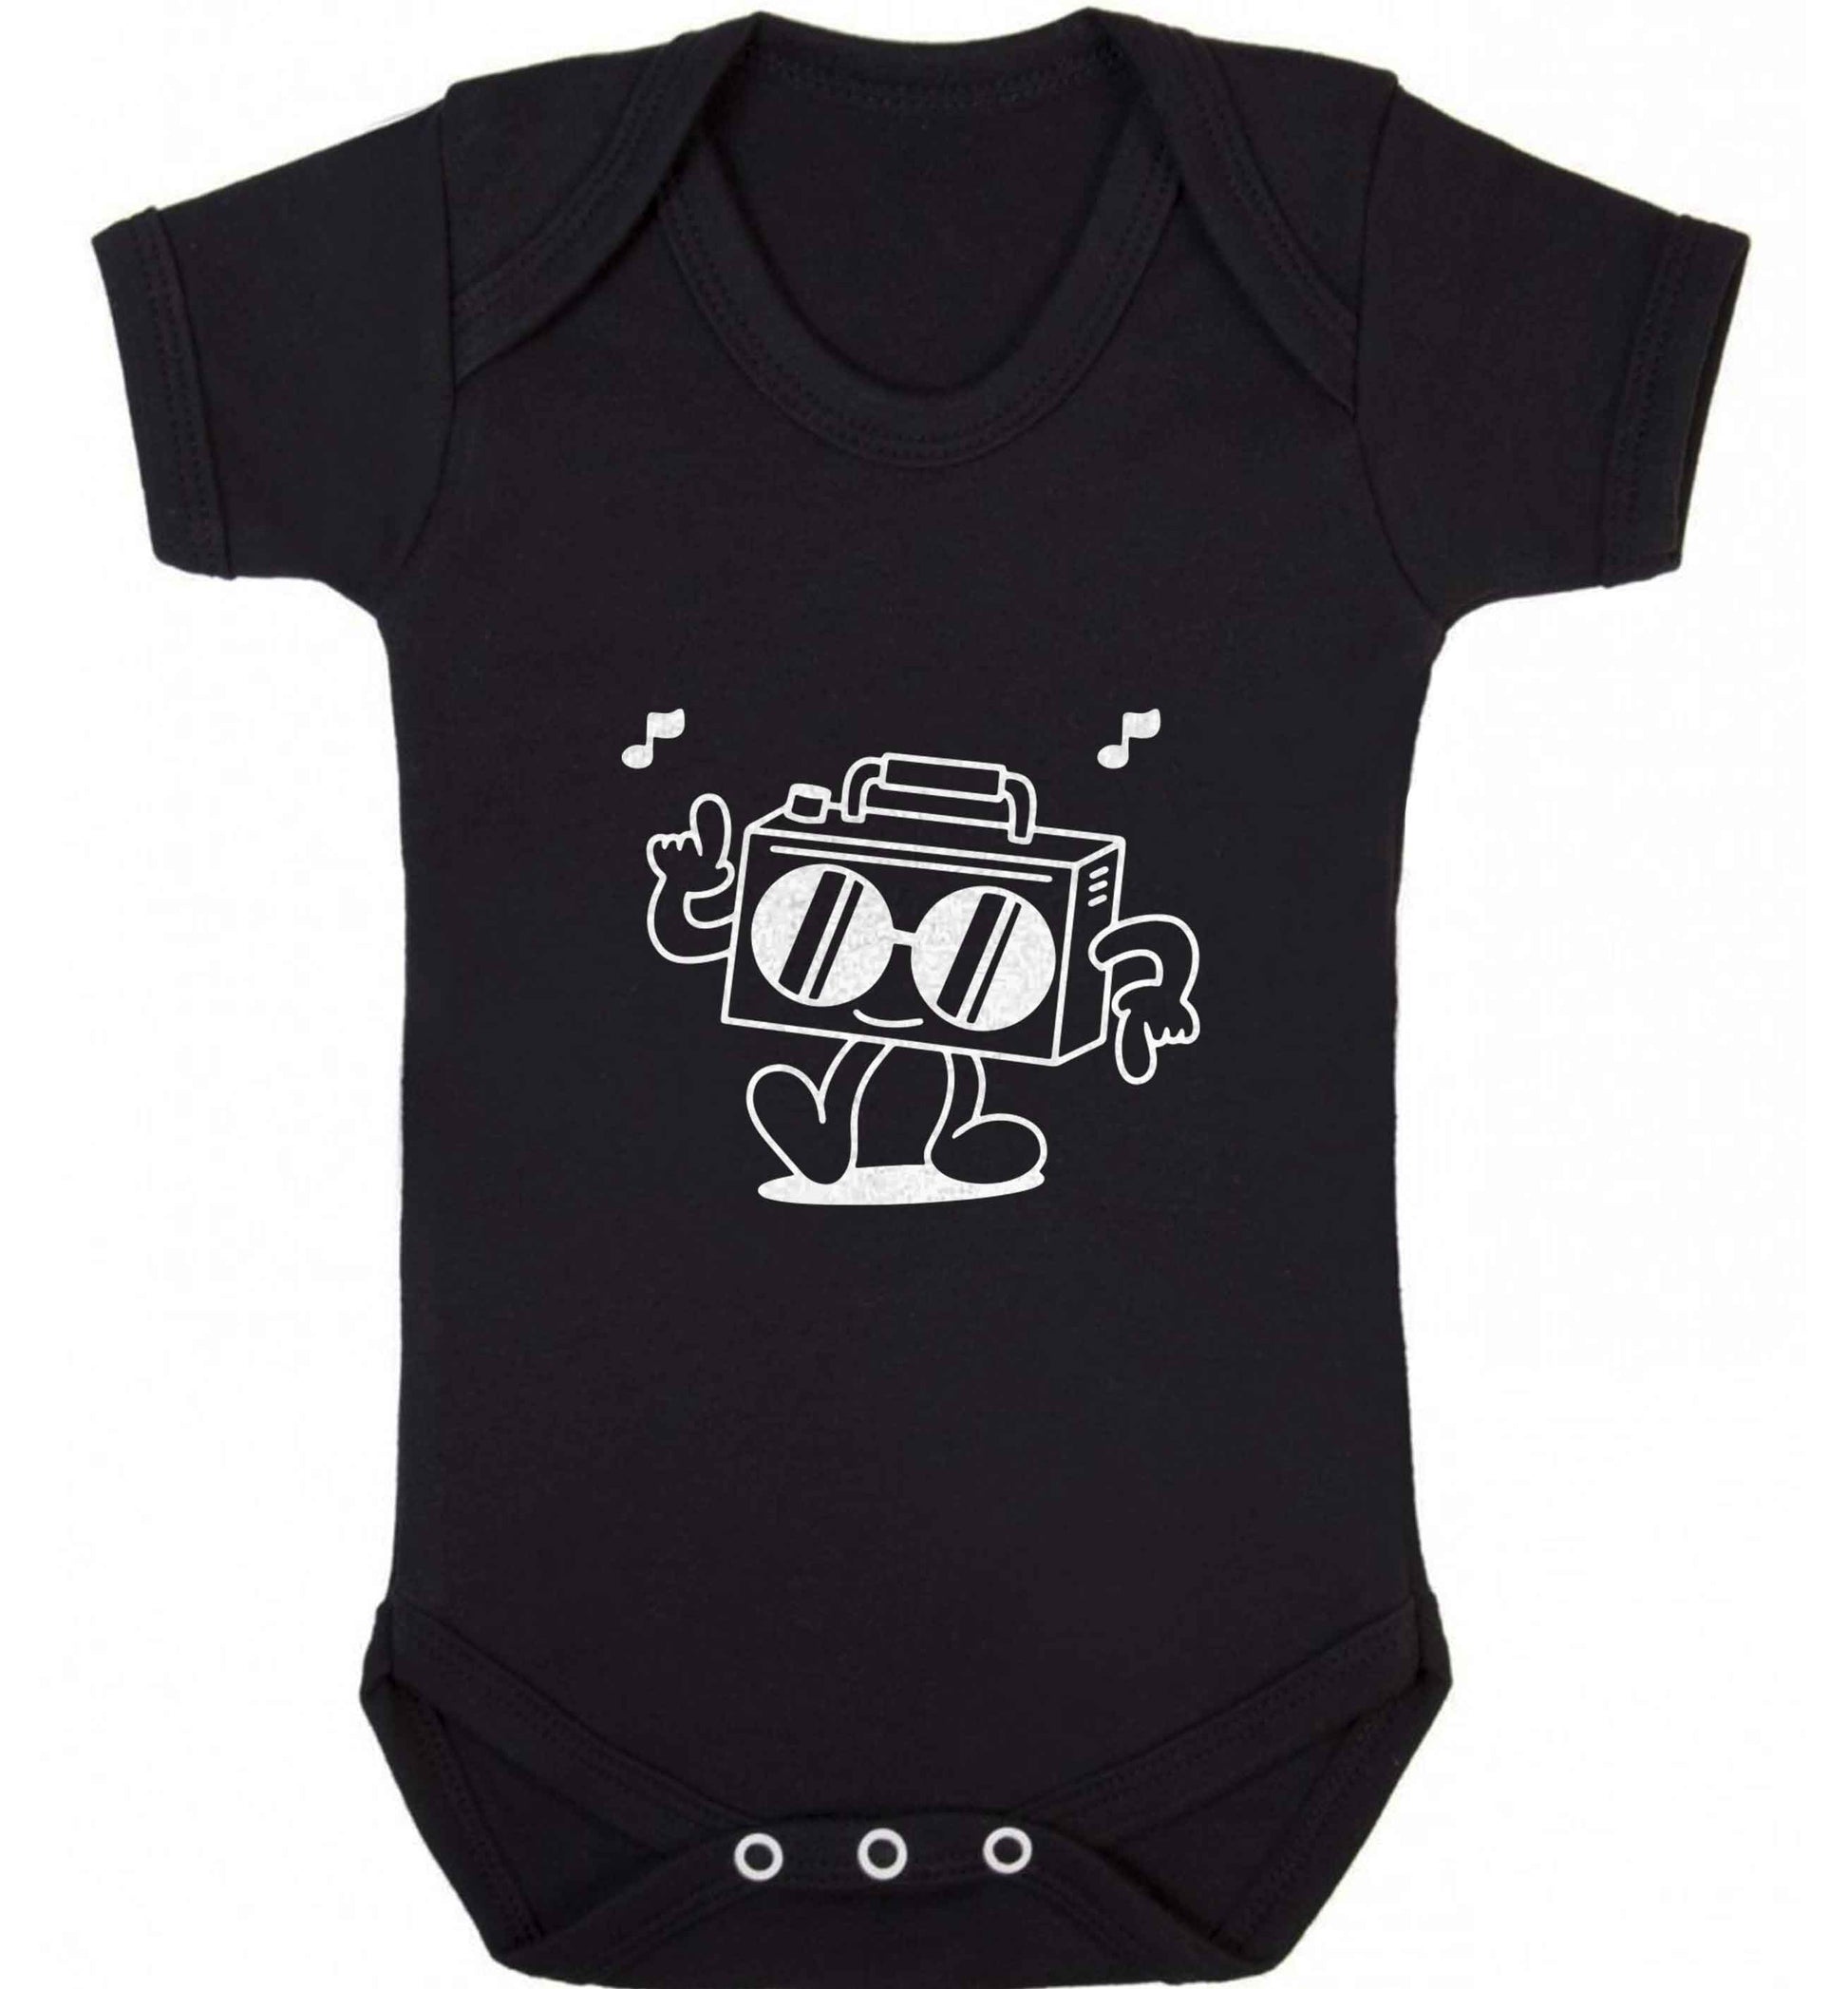 Boombox baby vest black 18-24 months